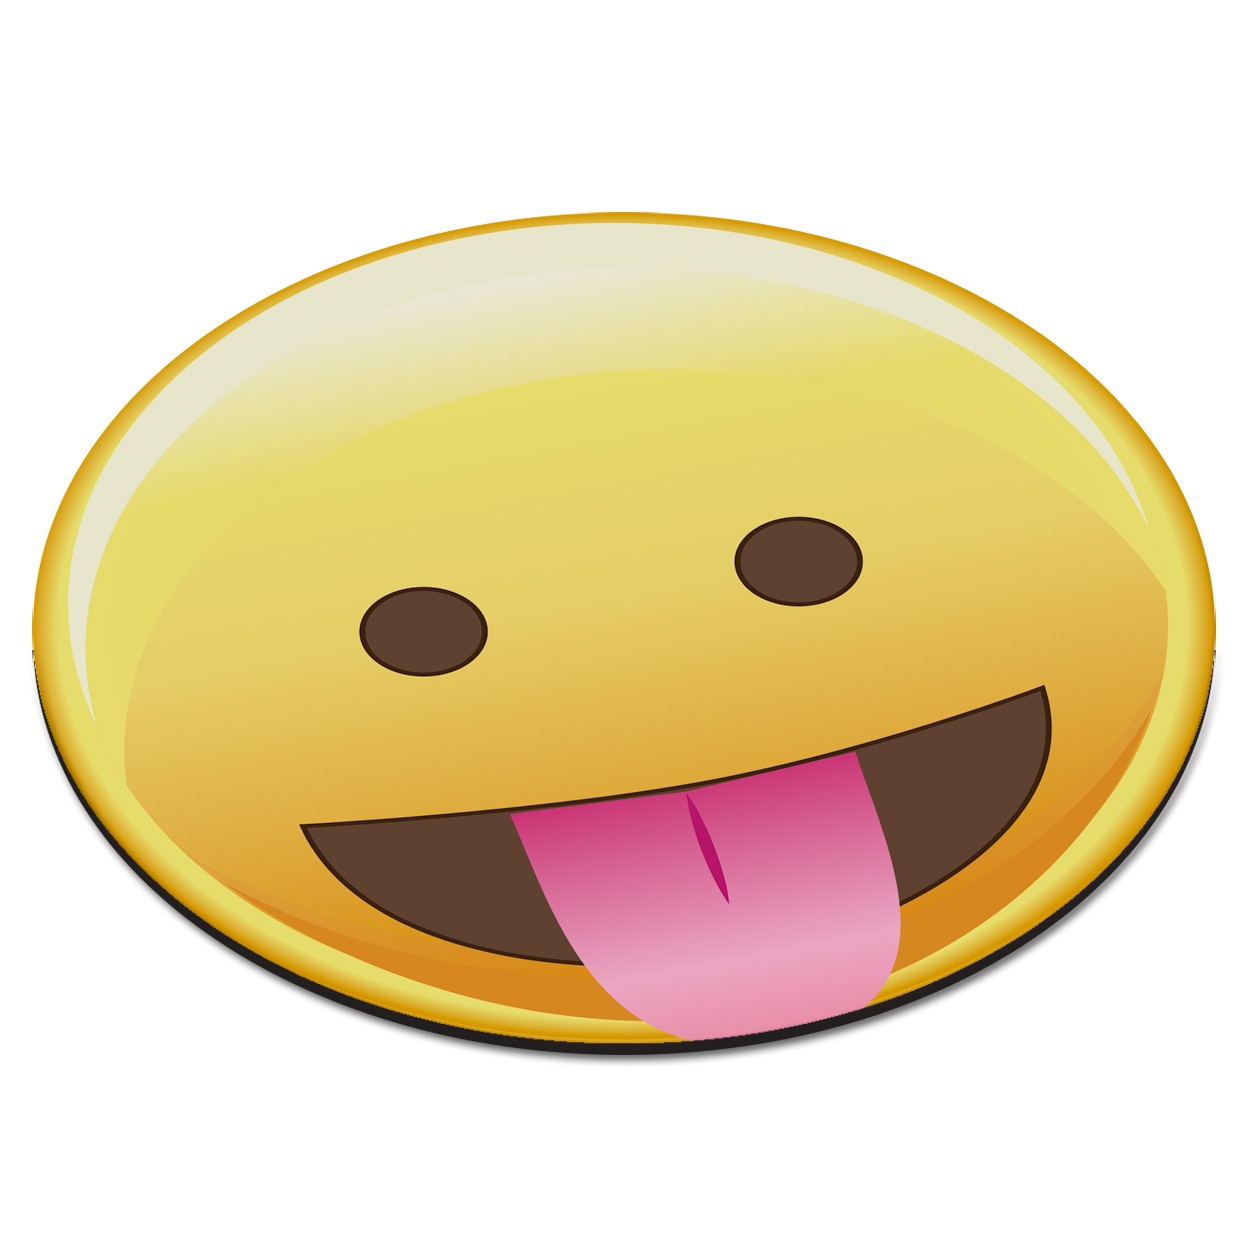 Emoji Tongue Out Open Eyes Smiley Face Circular PC Computer Mouse Mat Pad